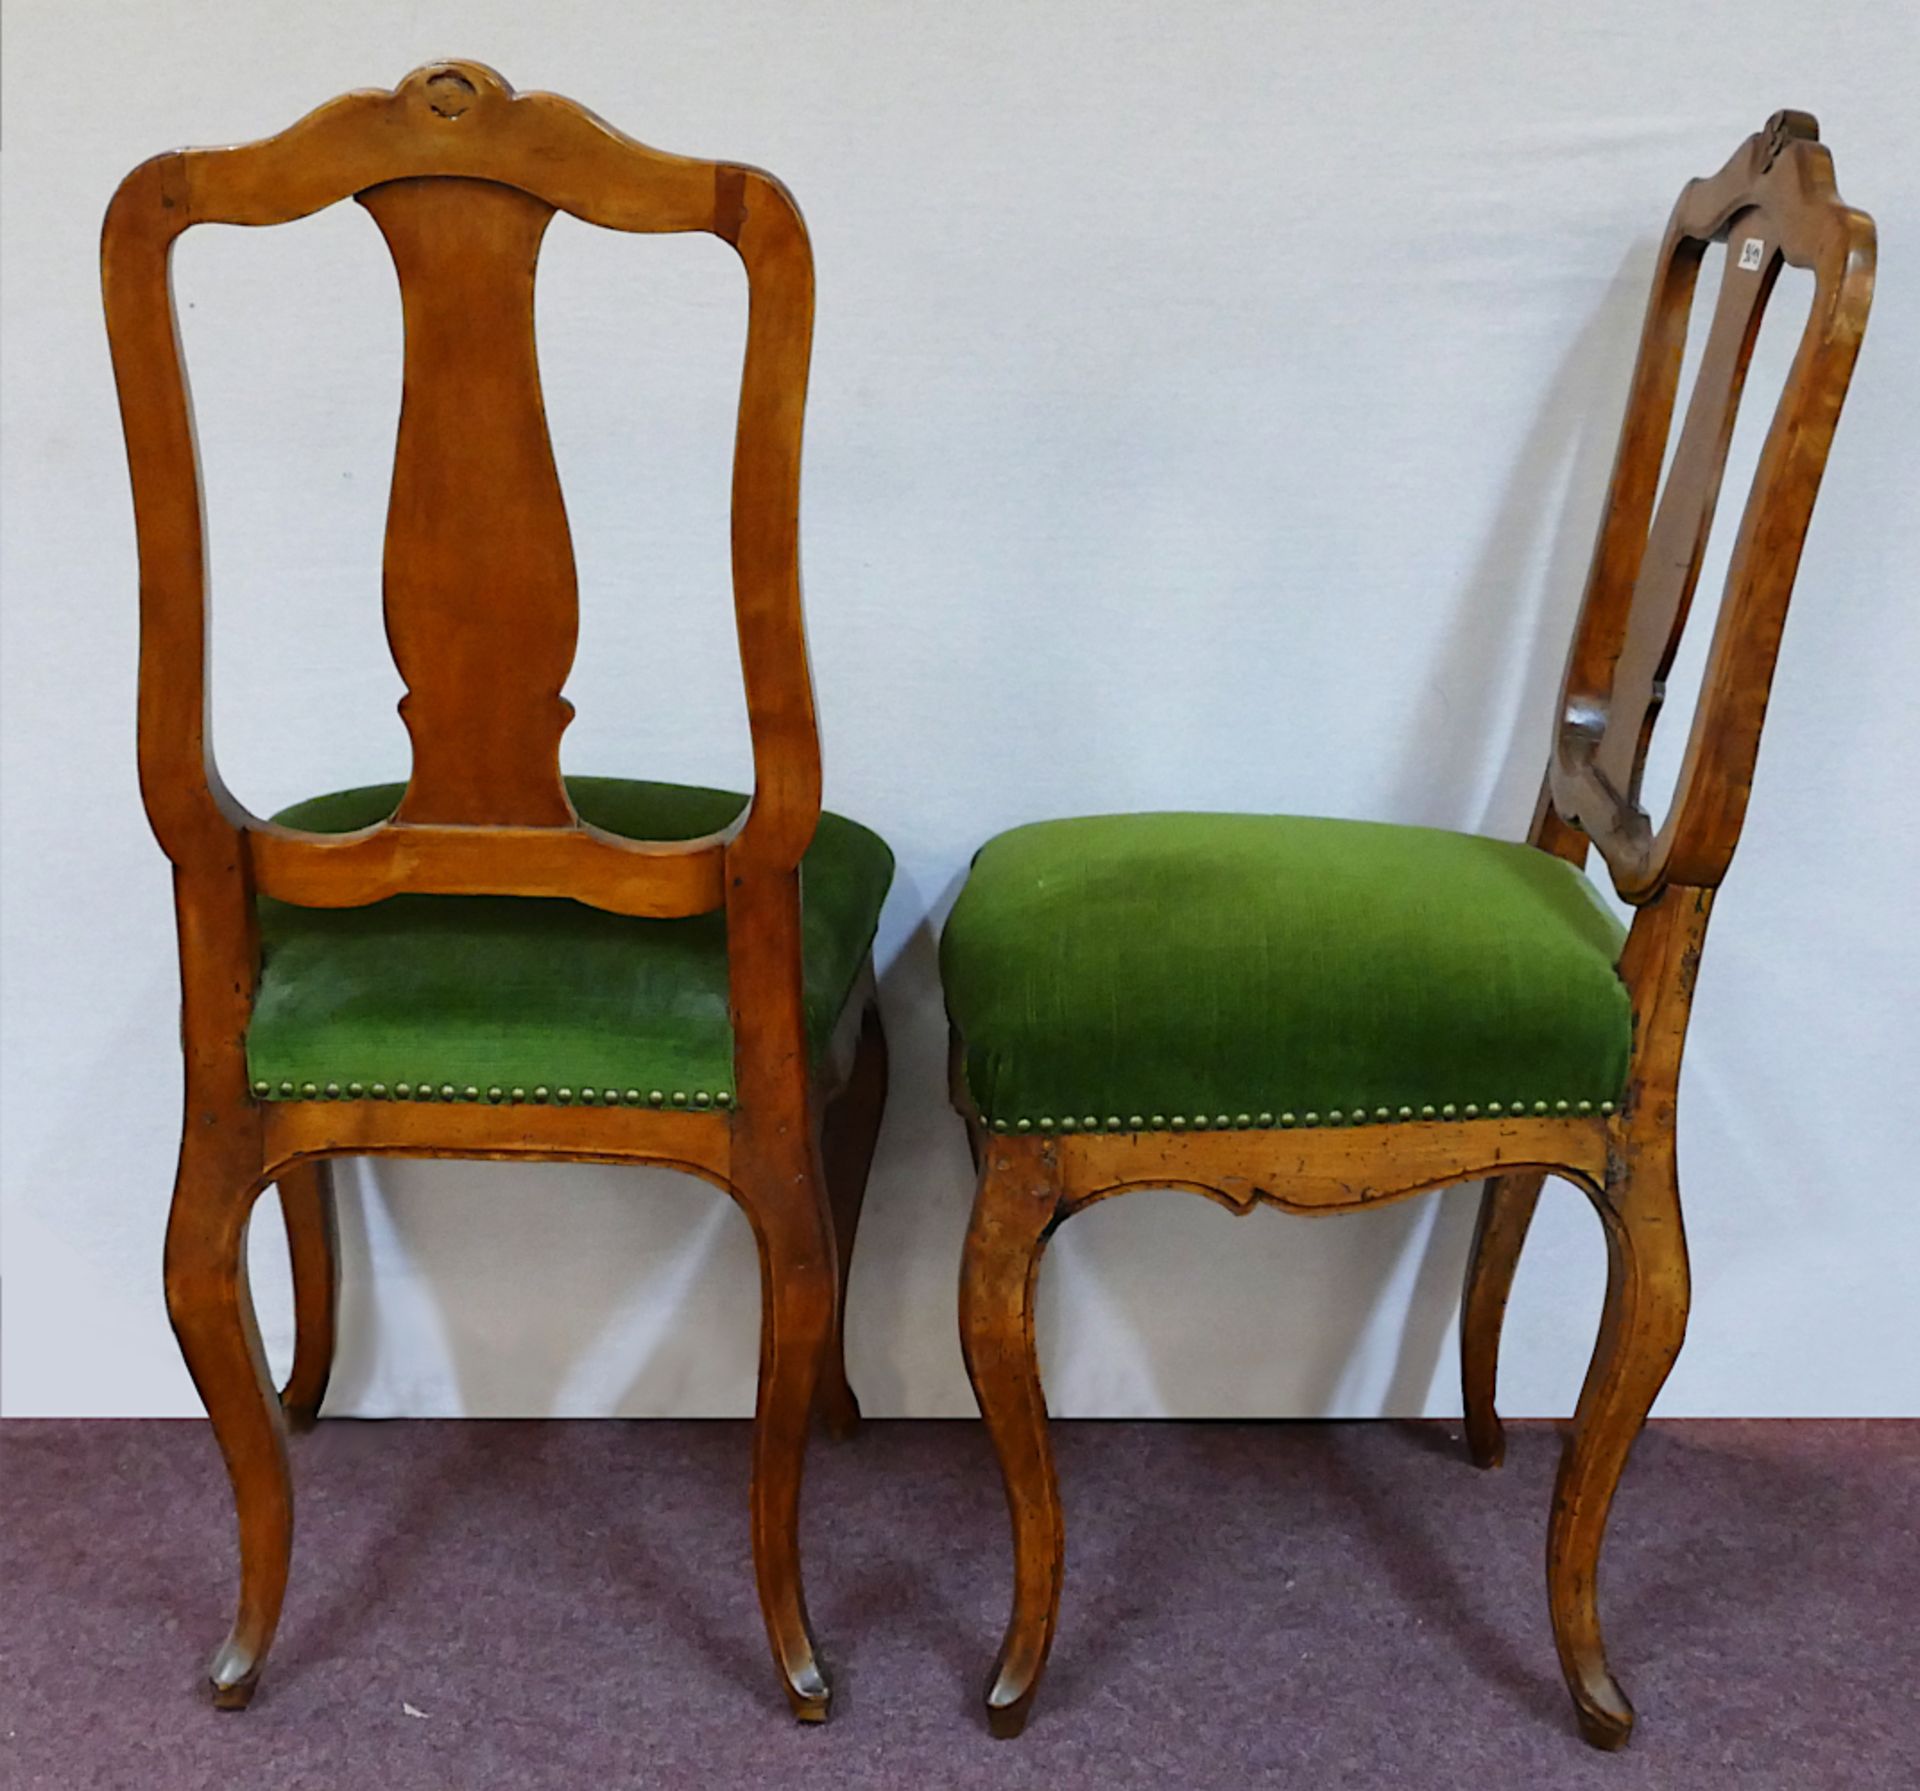 1 Paar Barockstühle wohl 18. Jh. Holz beschnitzt mit Blumenmedaillon, je H ca. 100cm, je Sitzfläche - Image 2 of 2